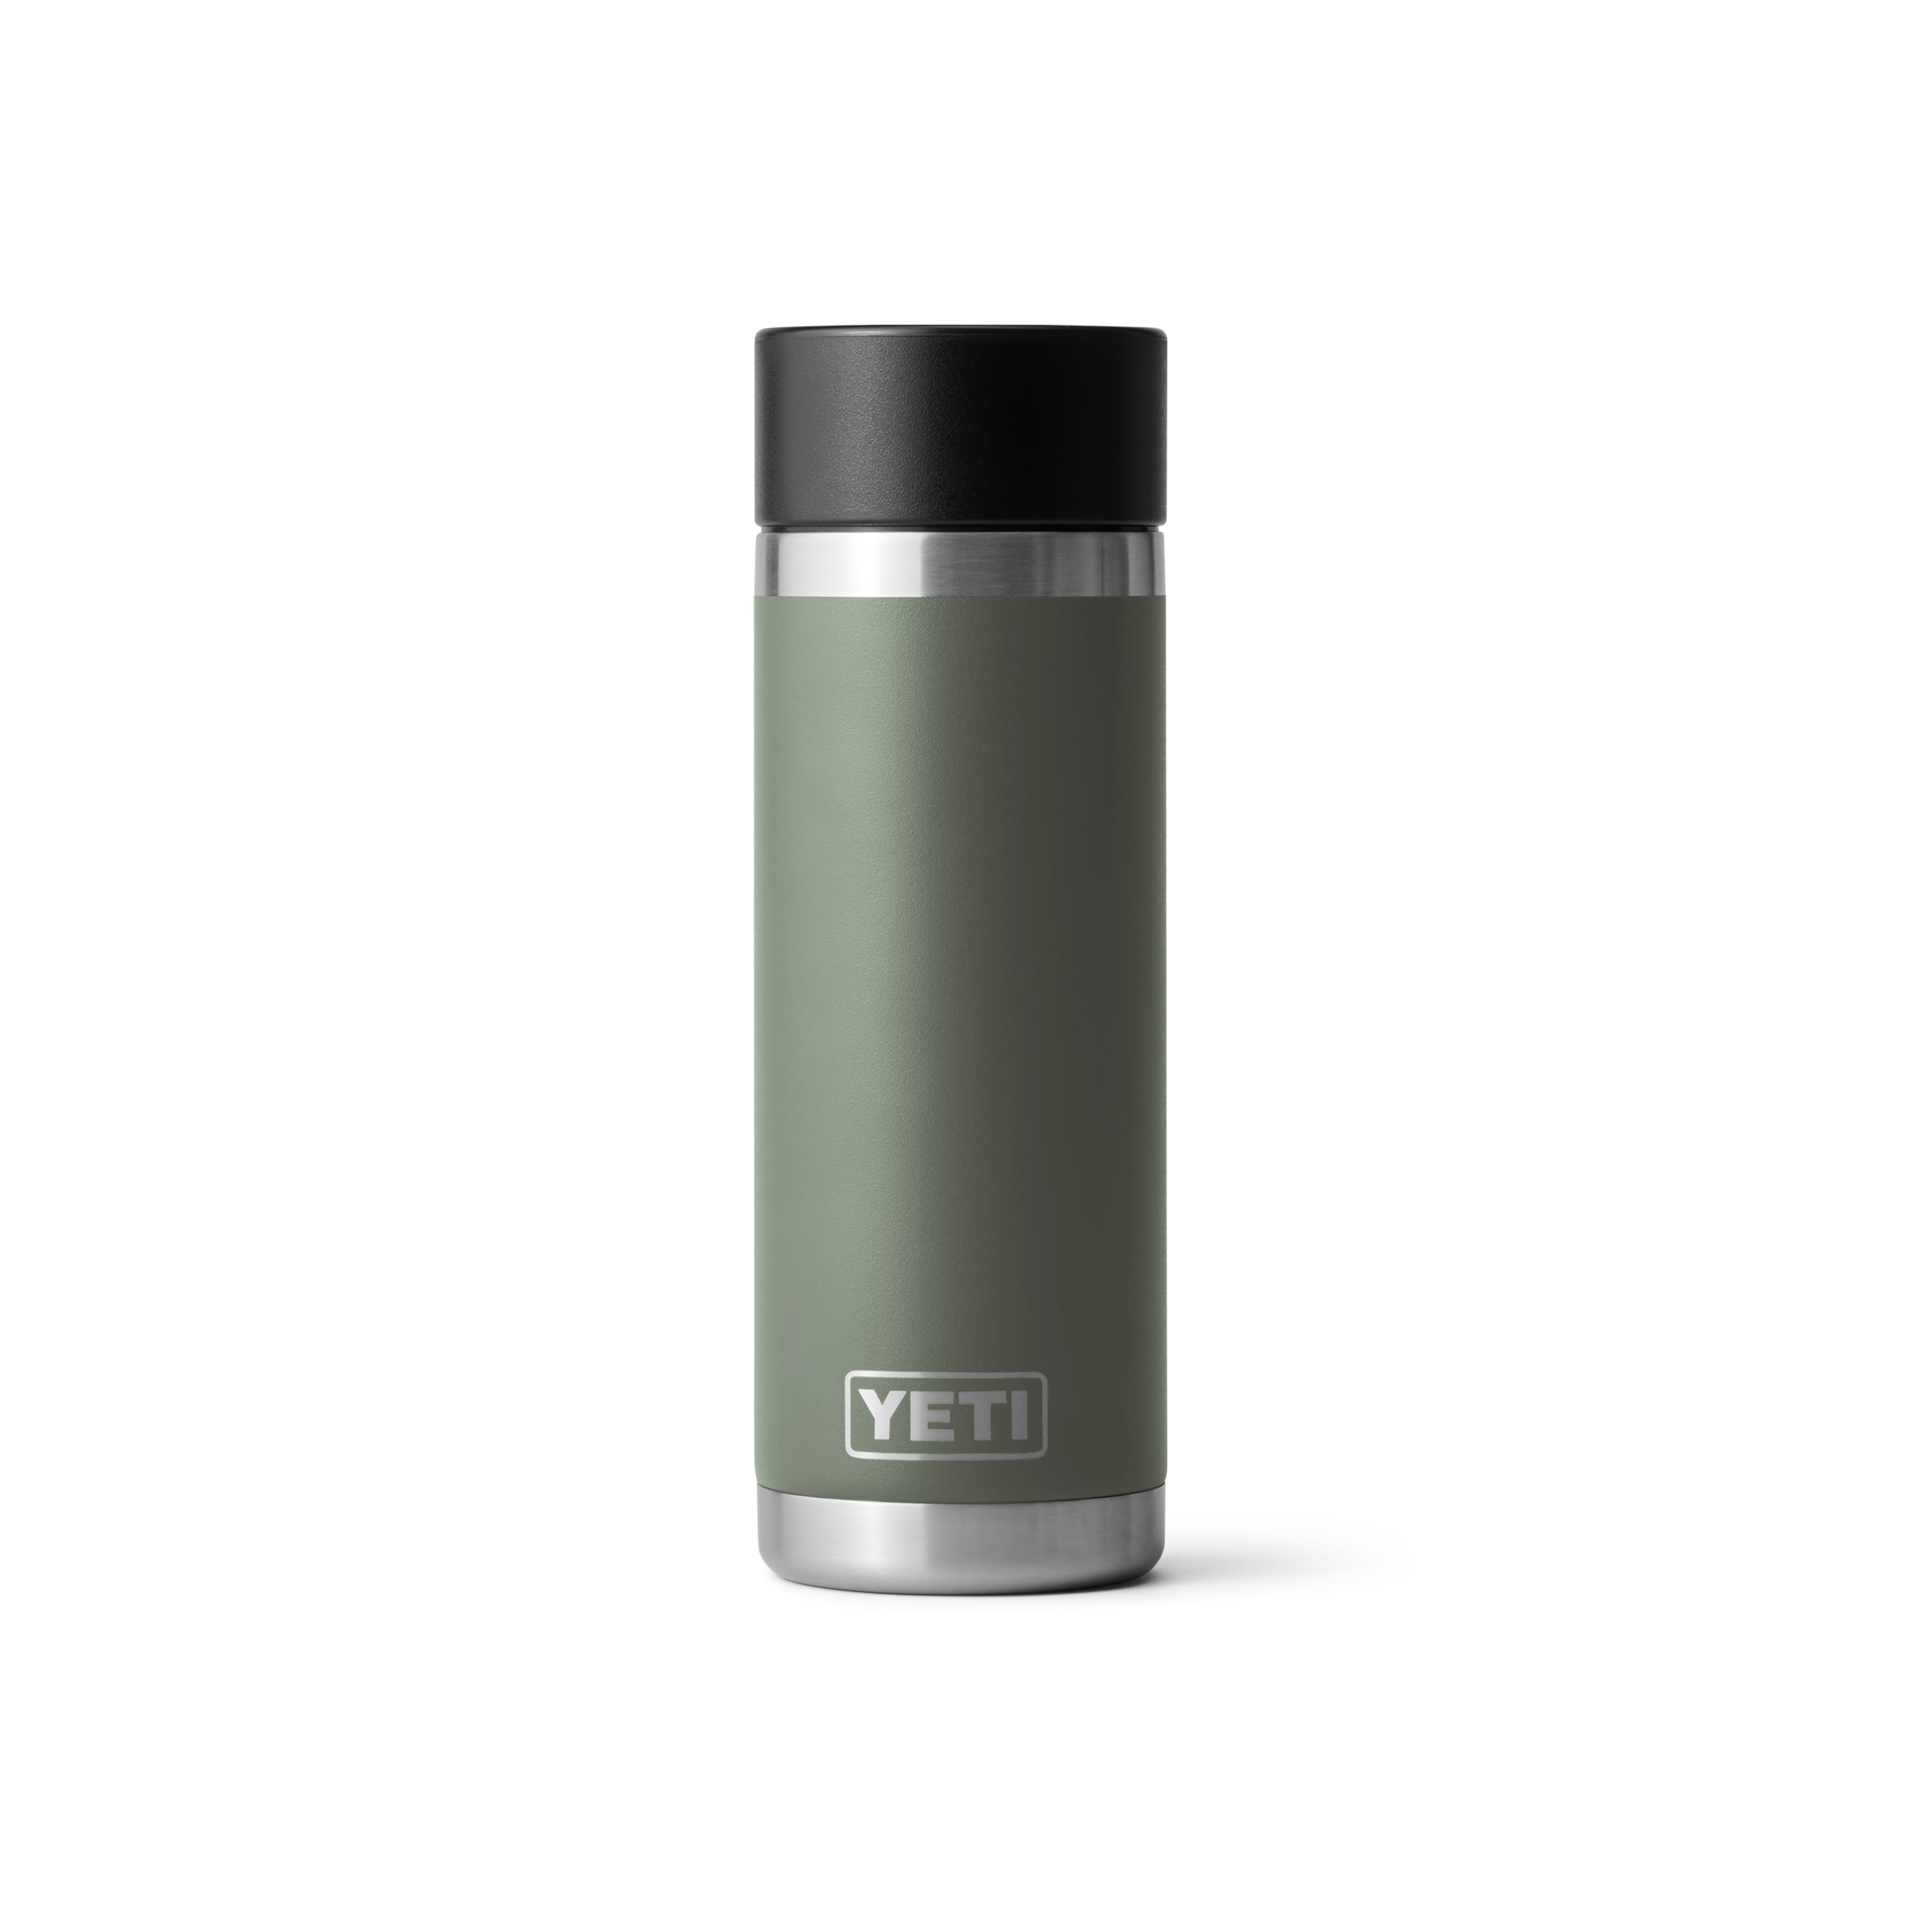 Yeti - Rambler 12 oz Bottle with Hotshot Cap